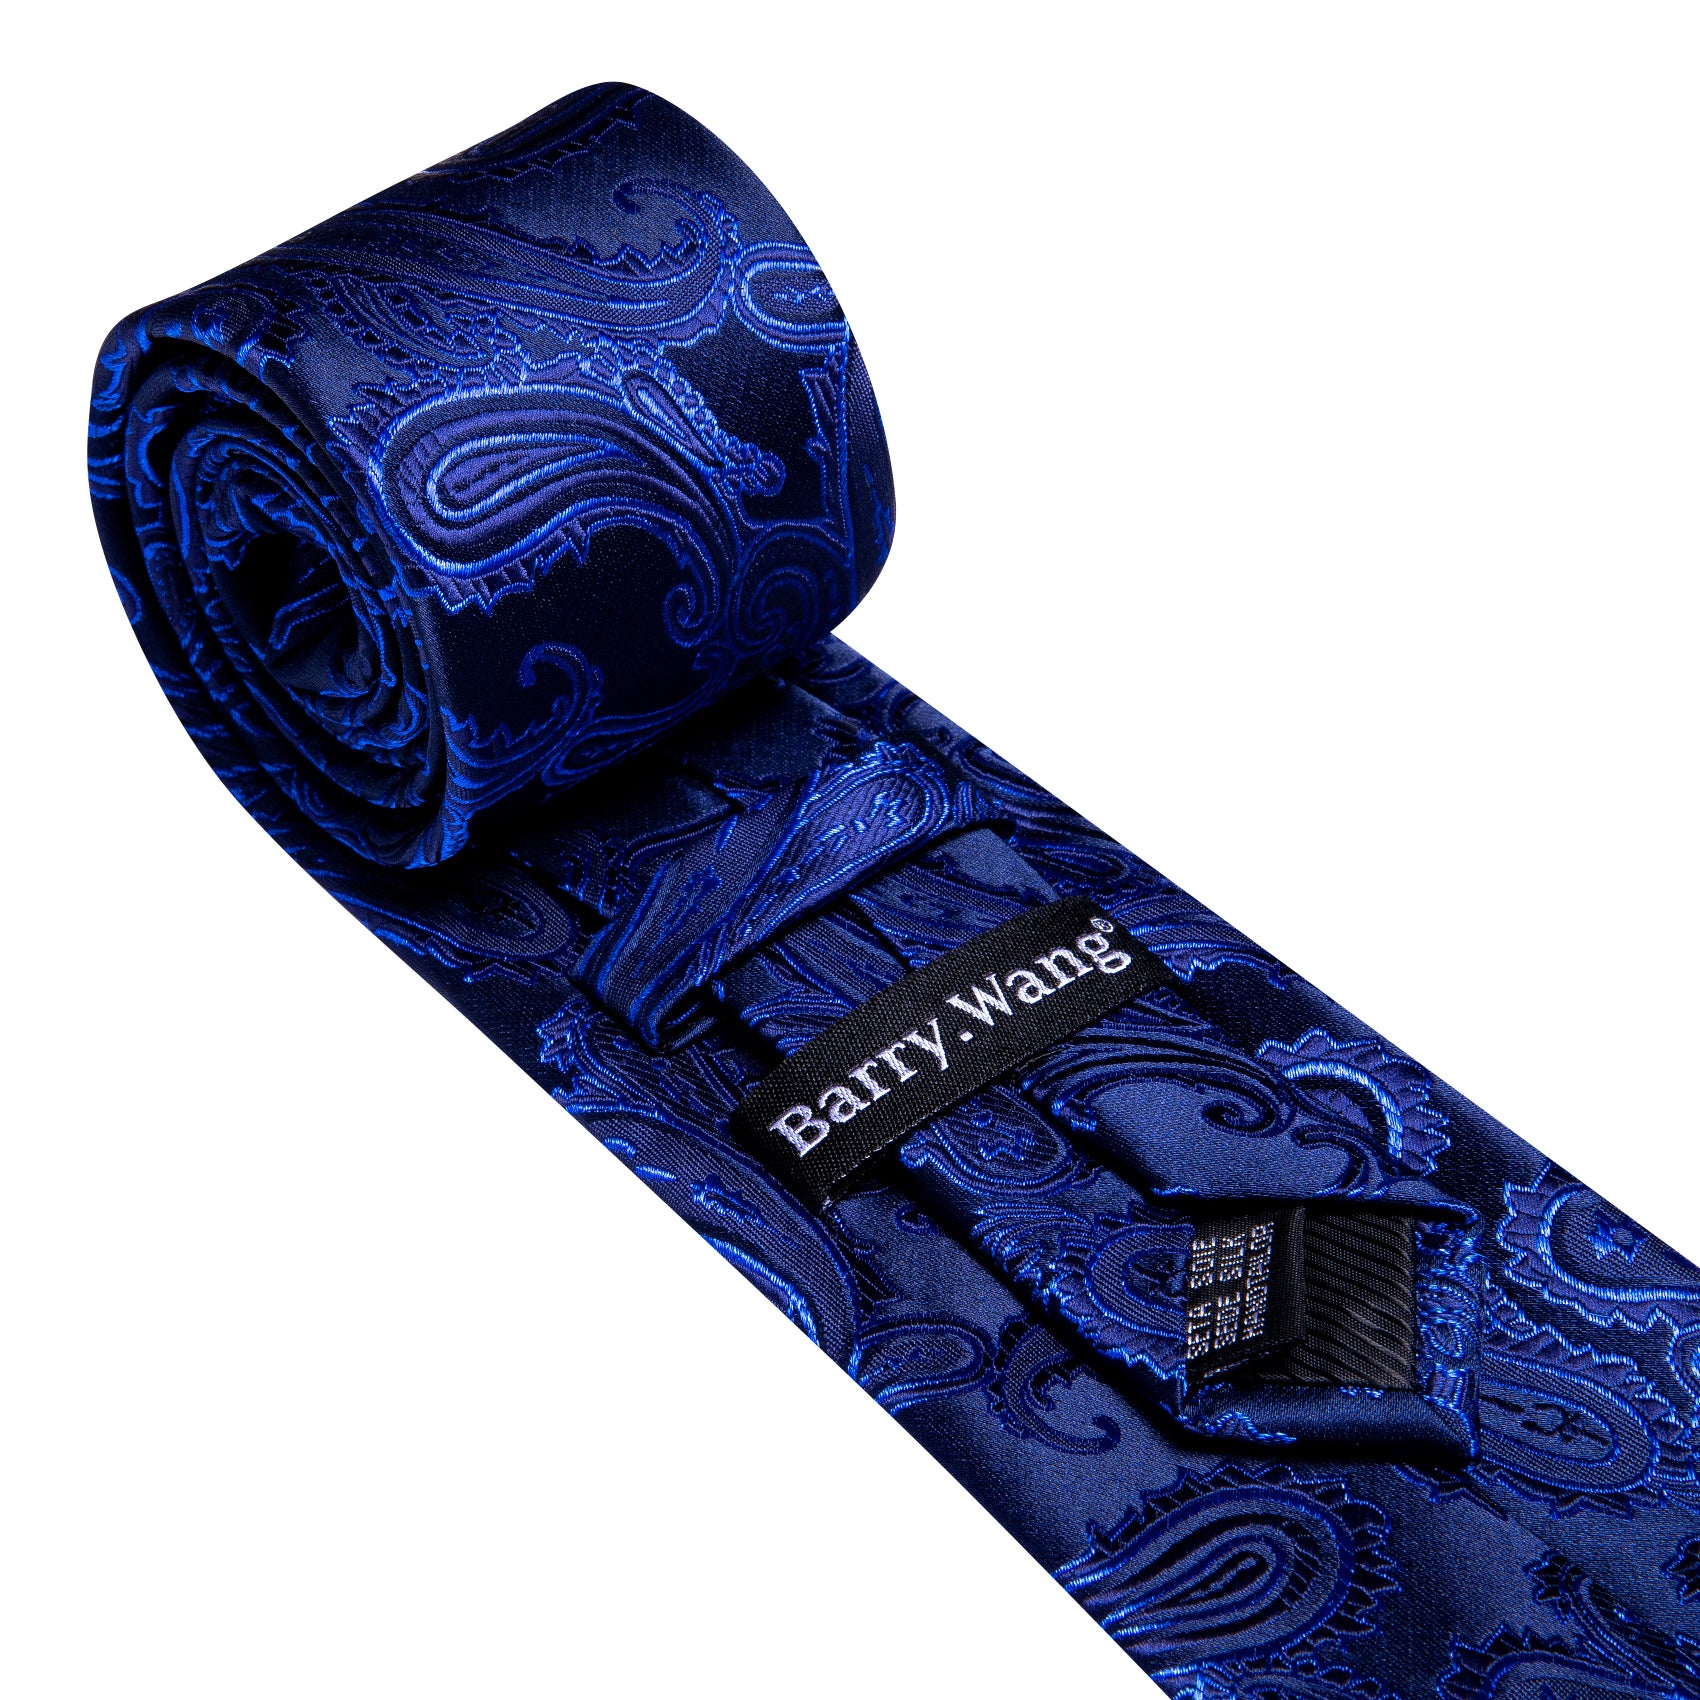 Navy Blue Paisley Silk Tie Handkerchief Cufflinks Set